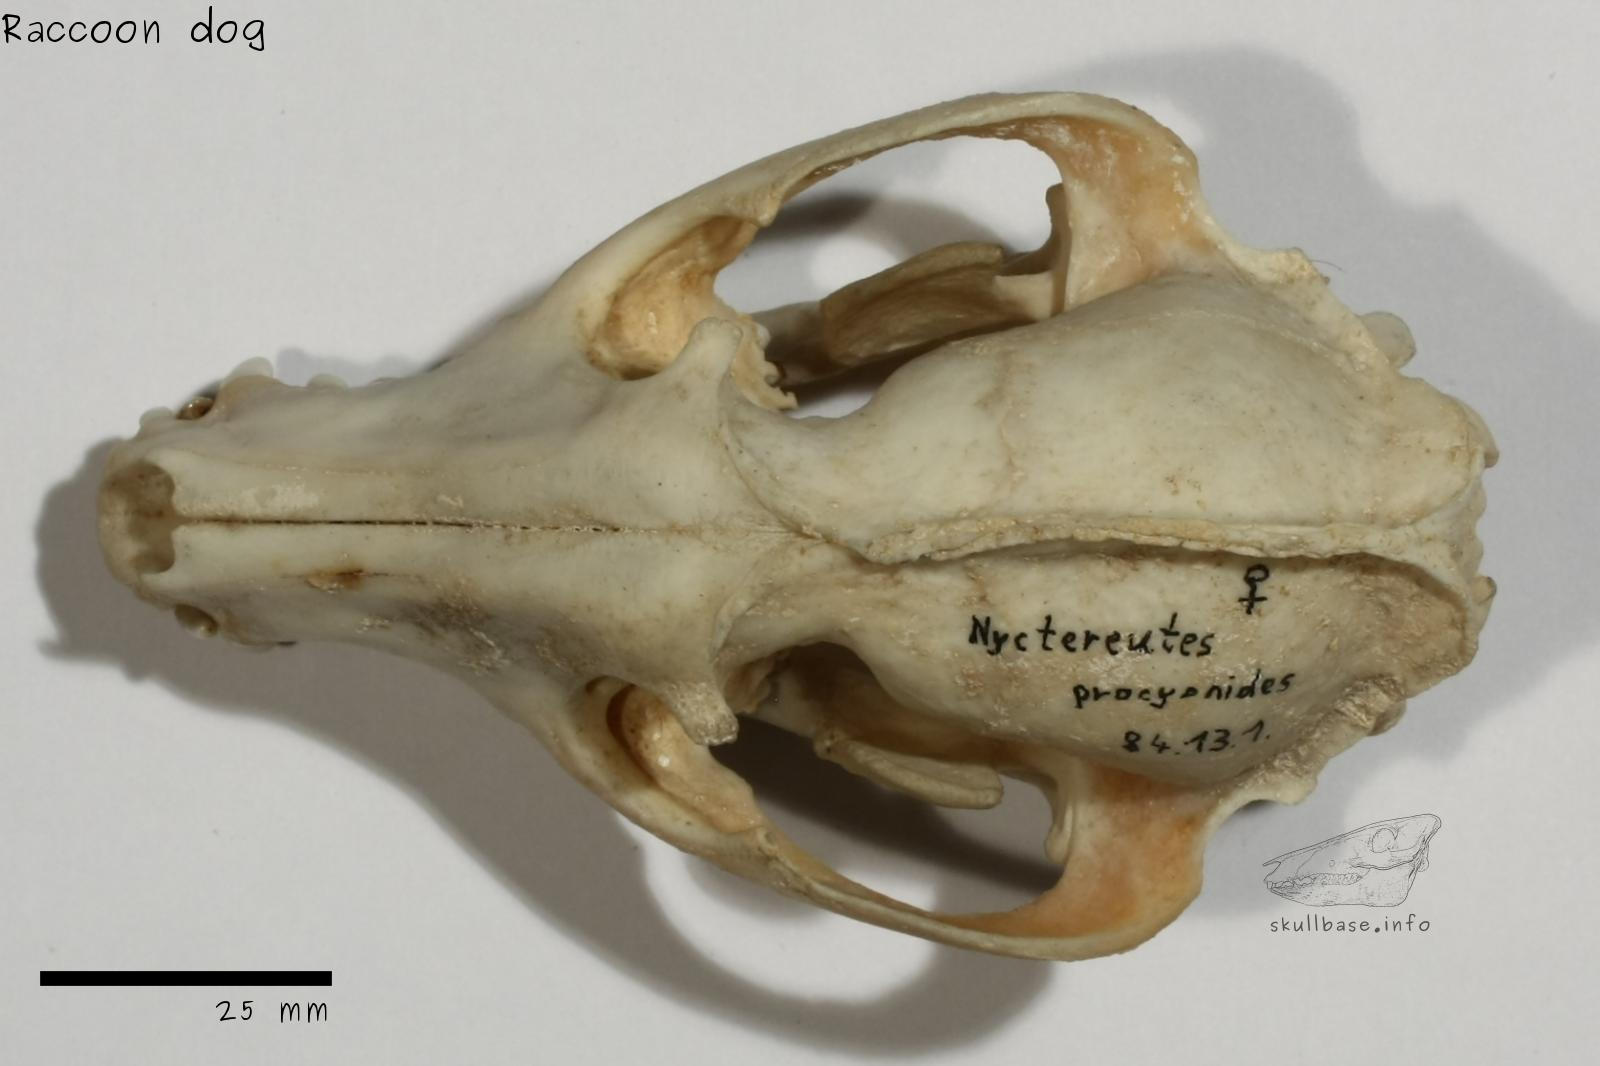 Raccoon dog (Nyctereutes procyonoides) skull dorsal view